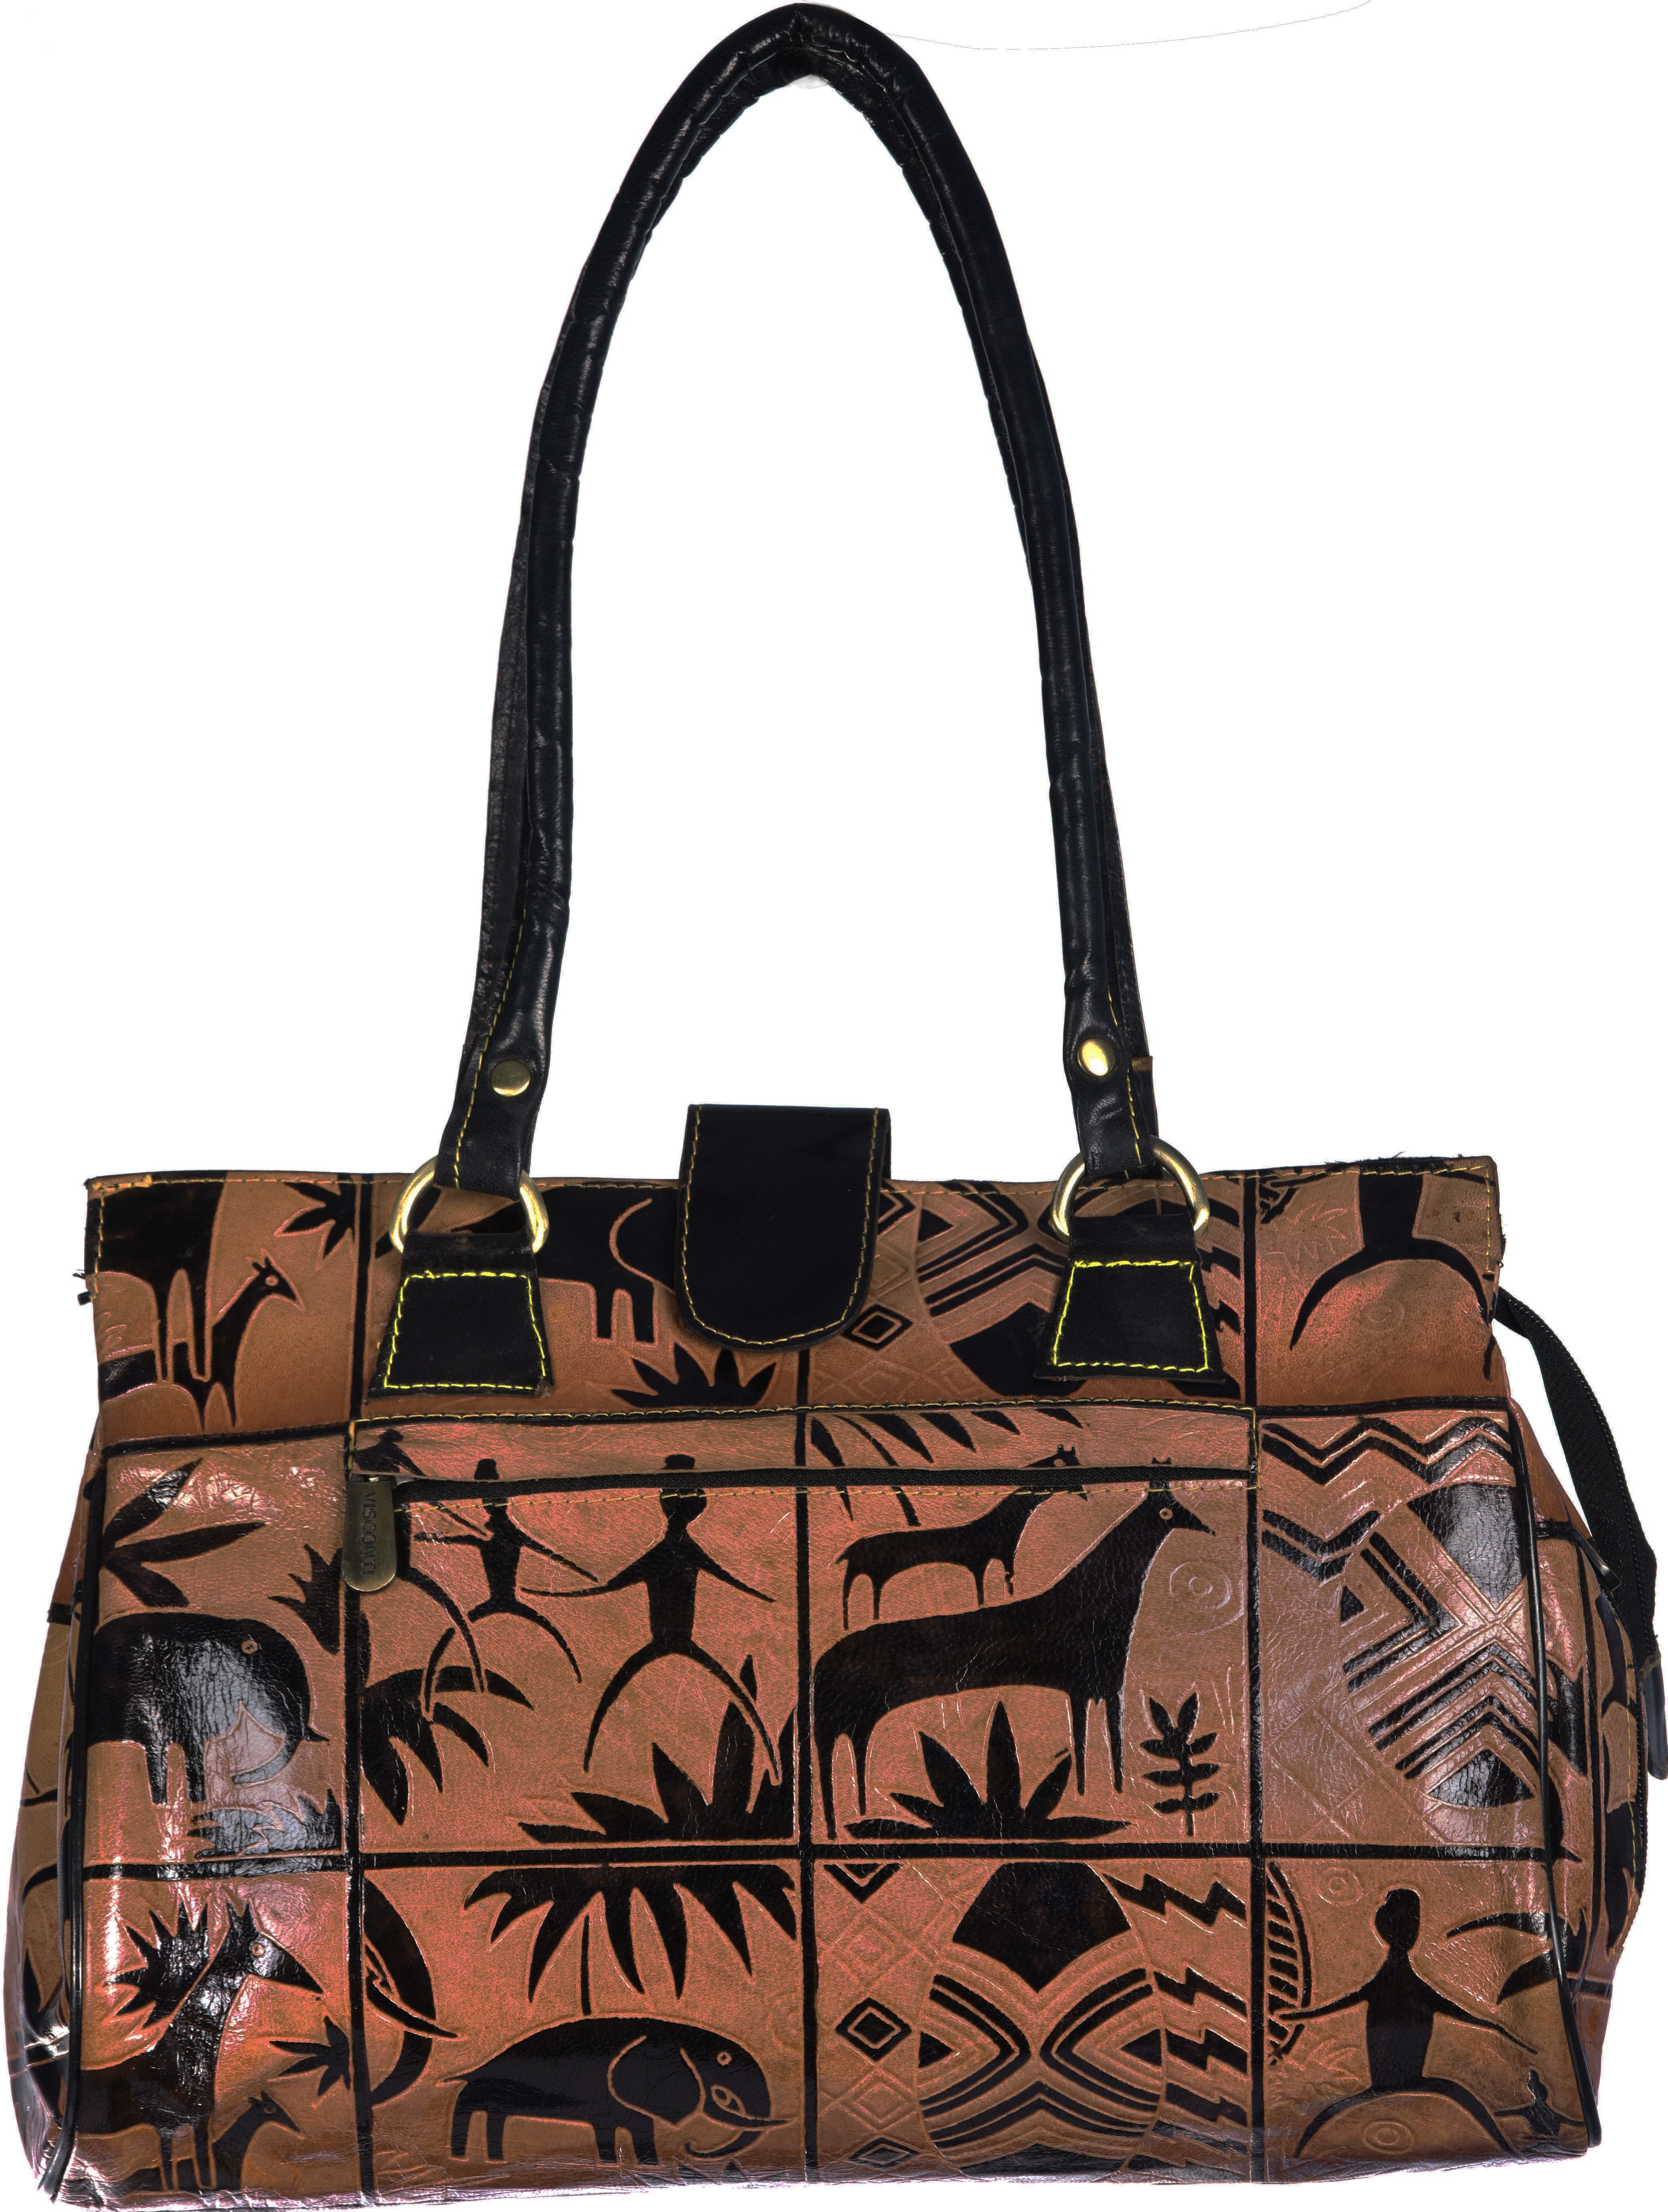 Designer Look Alike Handbags Wholesale